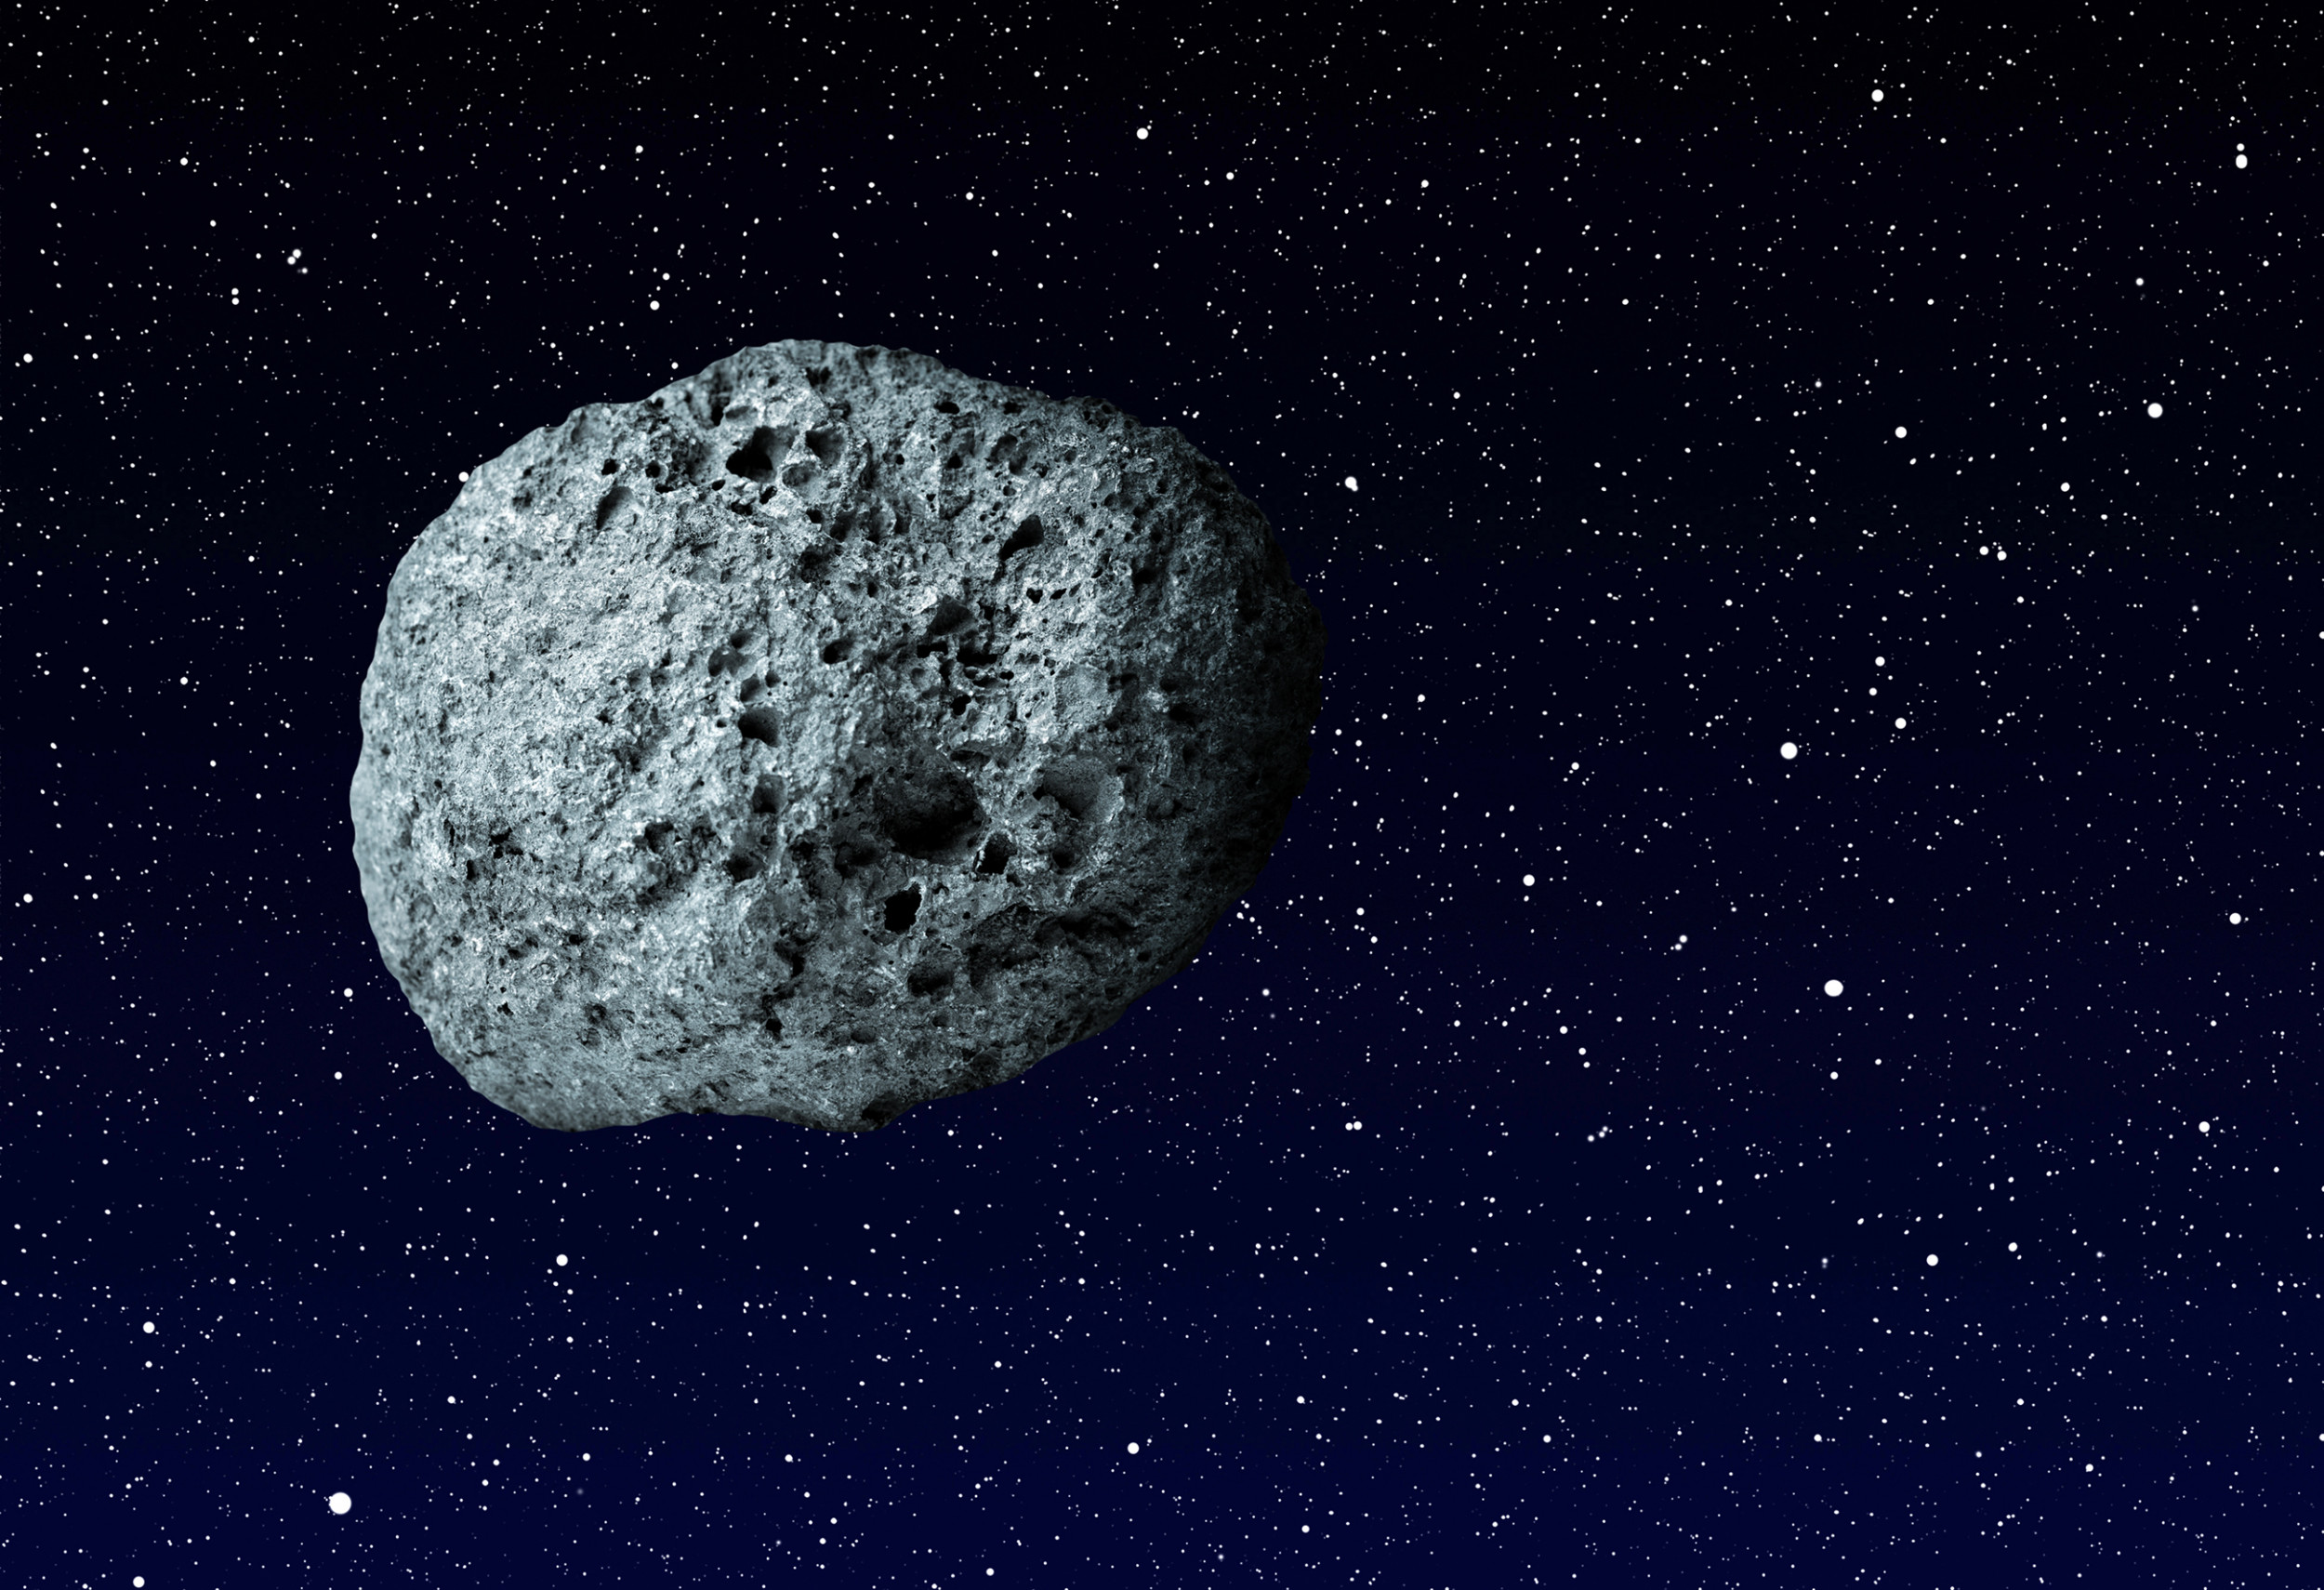 Student Slideshow: Whats That Space Rock? | NASA/JPL Edu